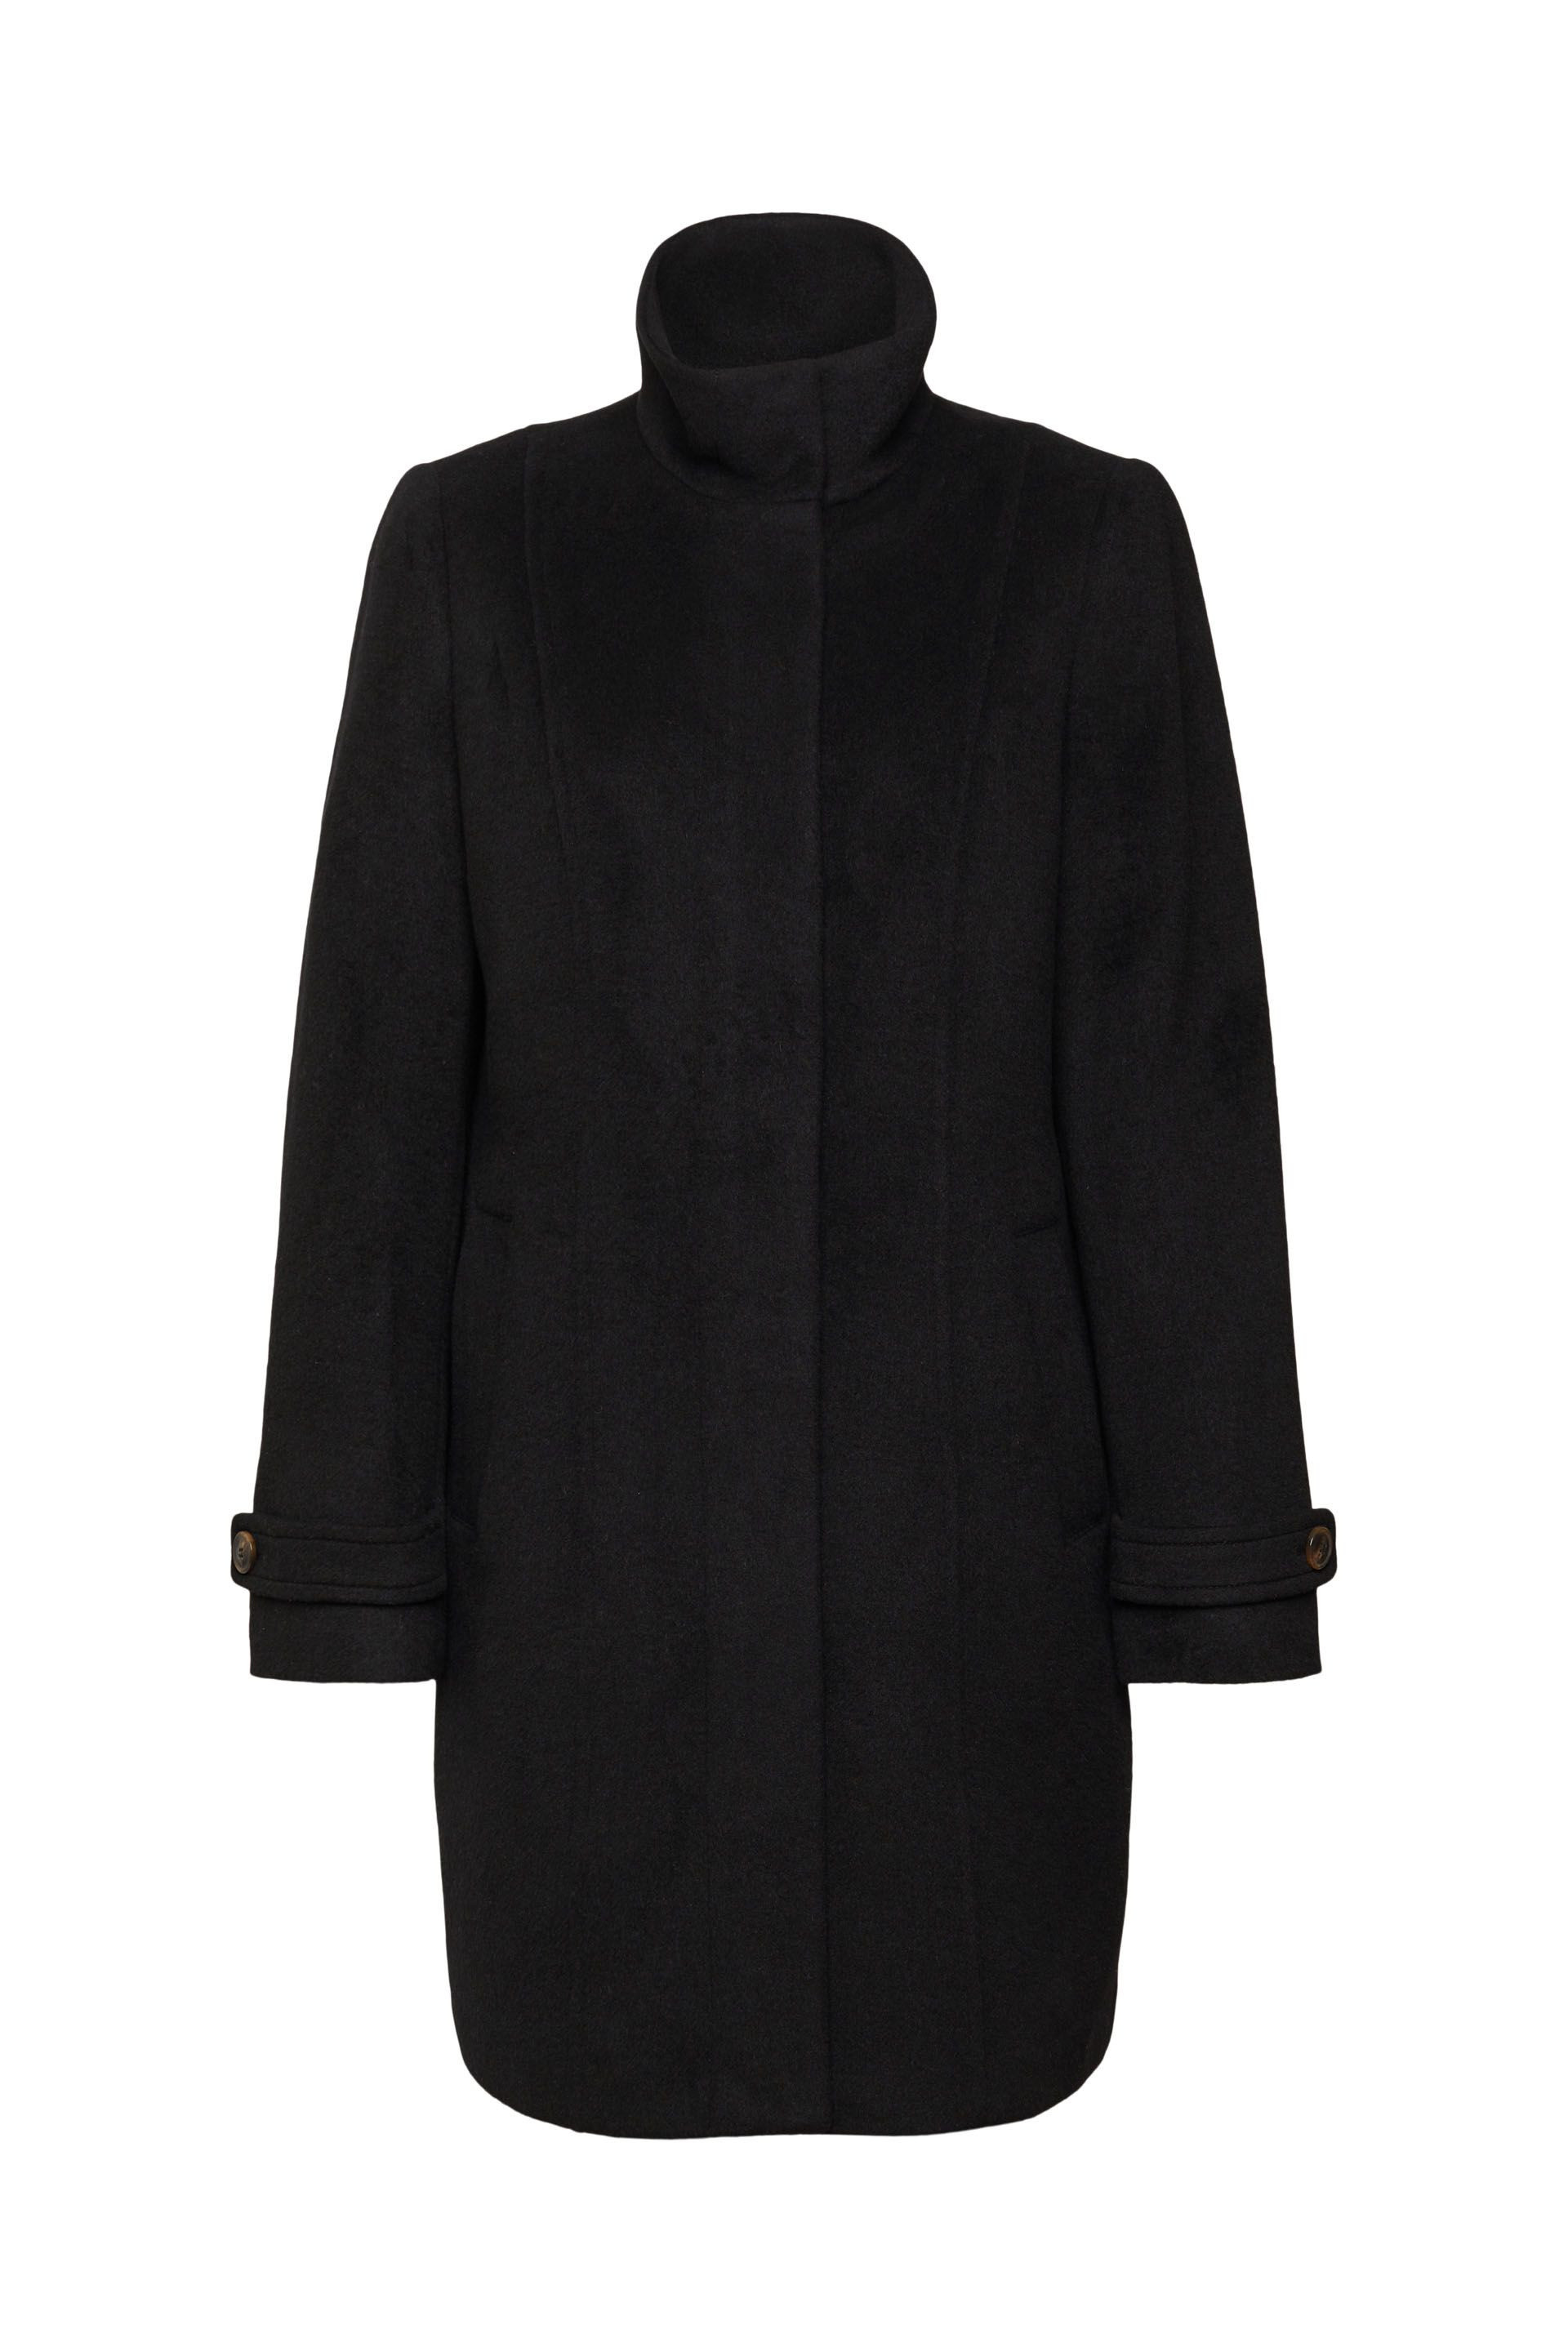 Collared coat, Black, large image number 0